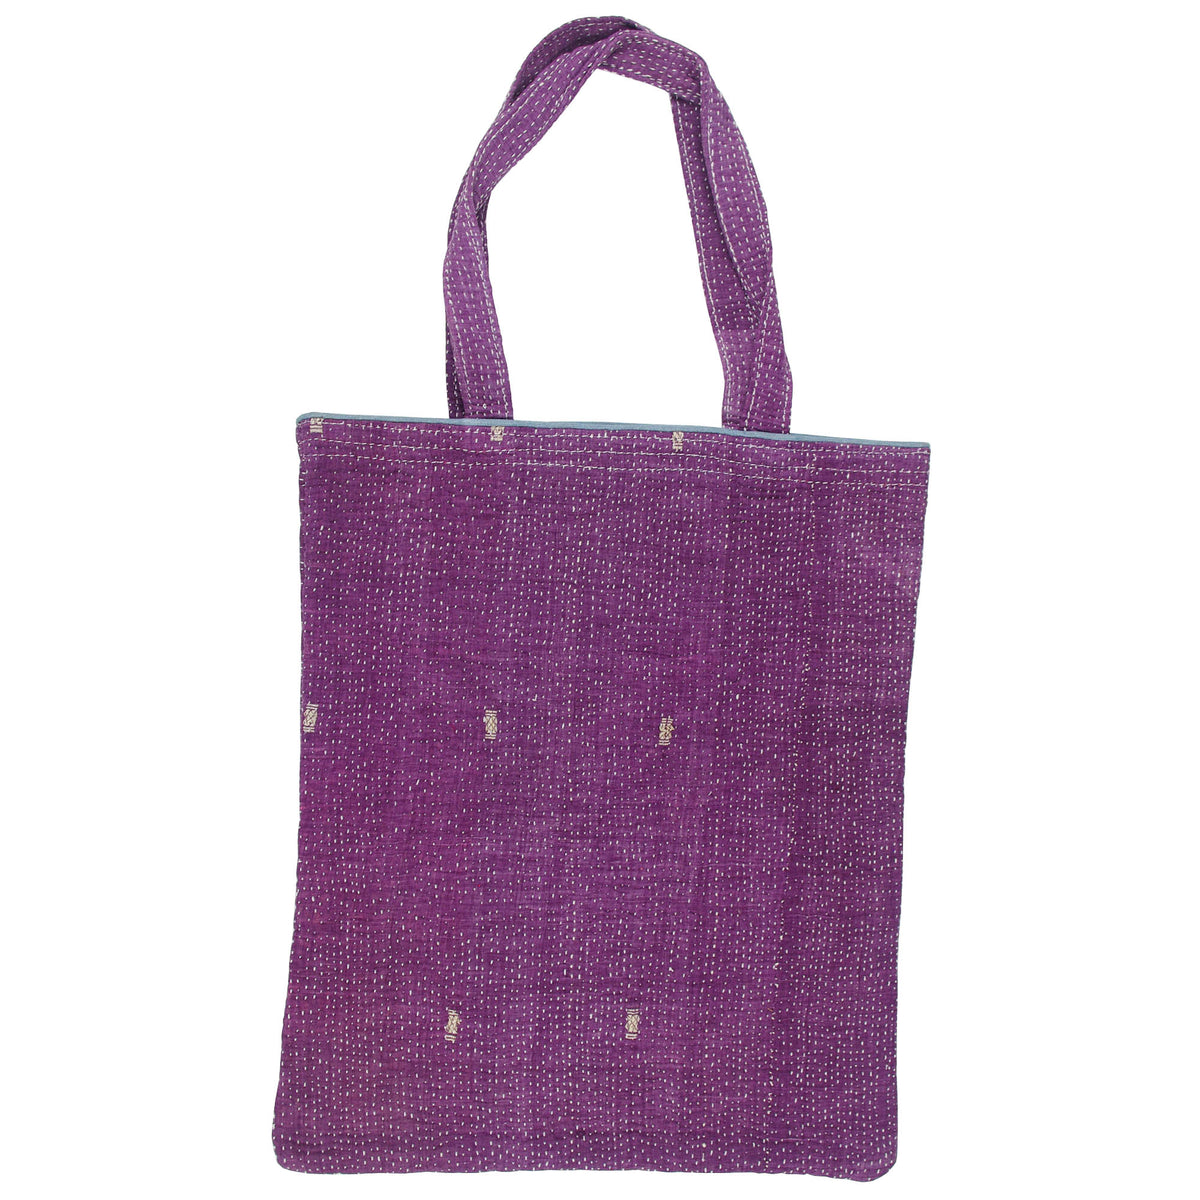 Vintage Fine Kantha Stitched Cotton Tote Bag- Dusty Purple